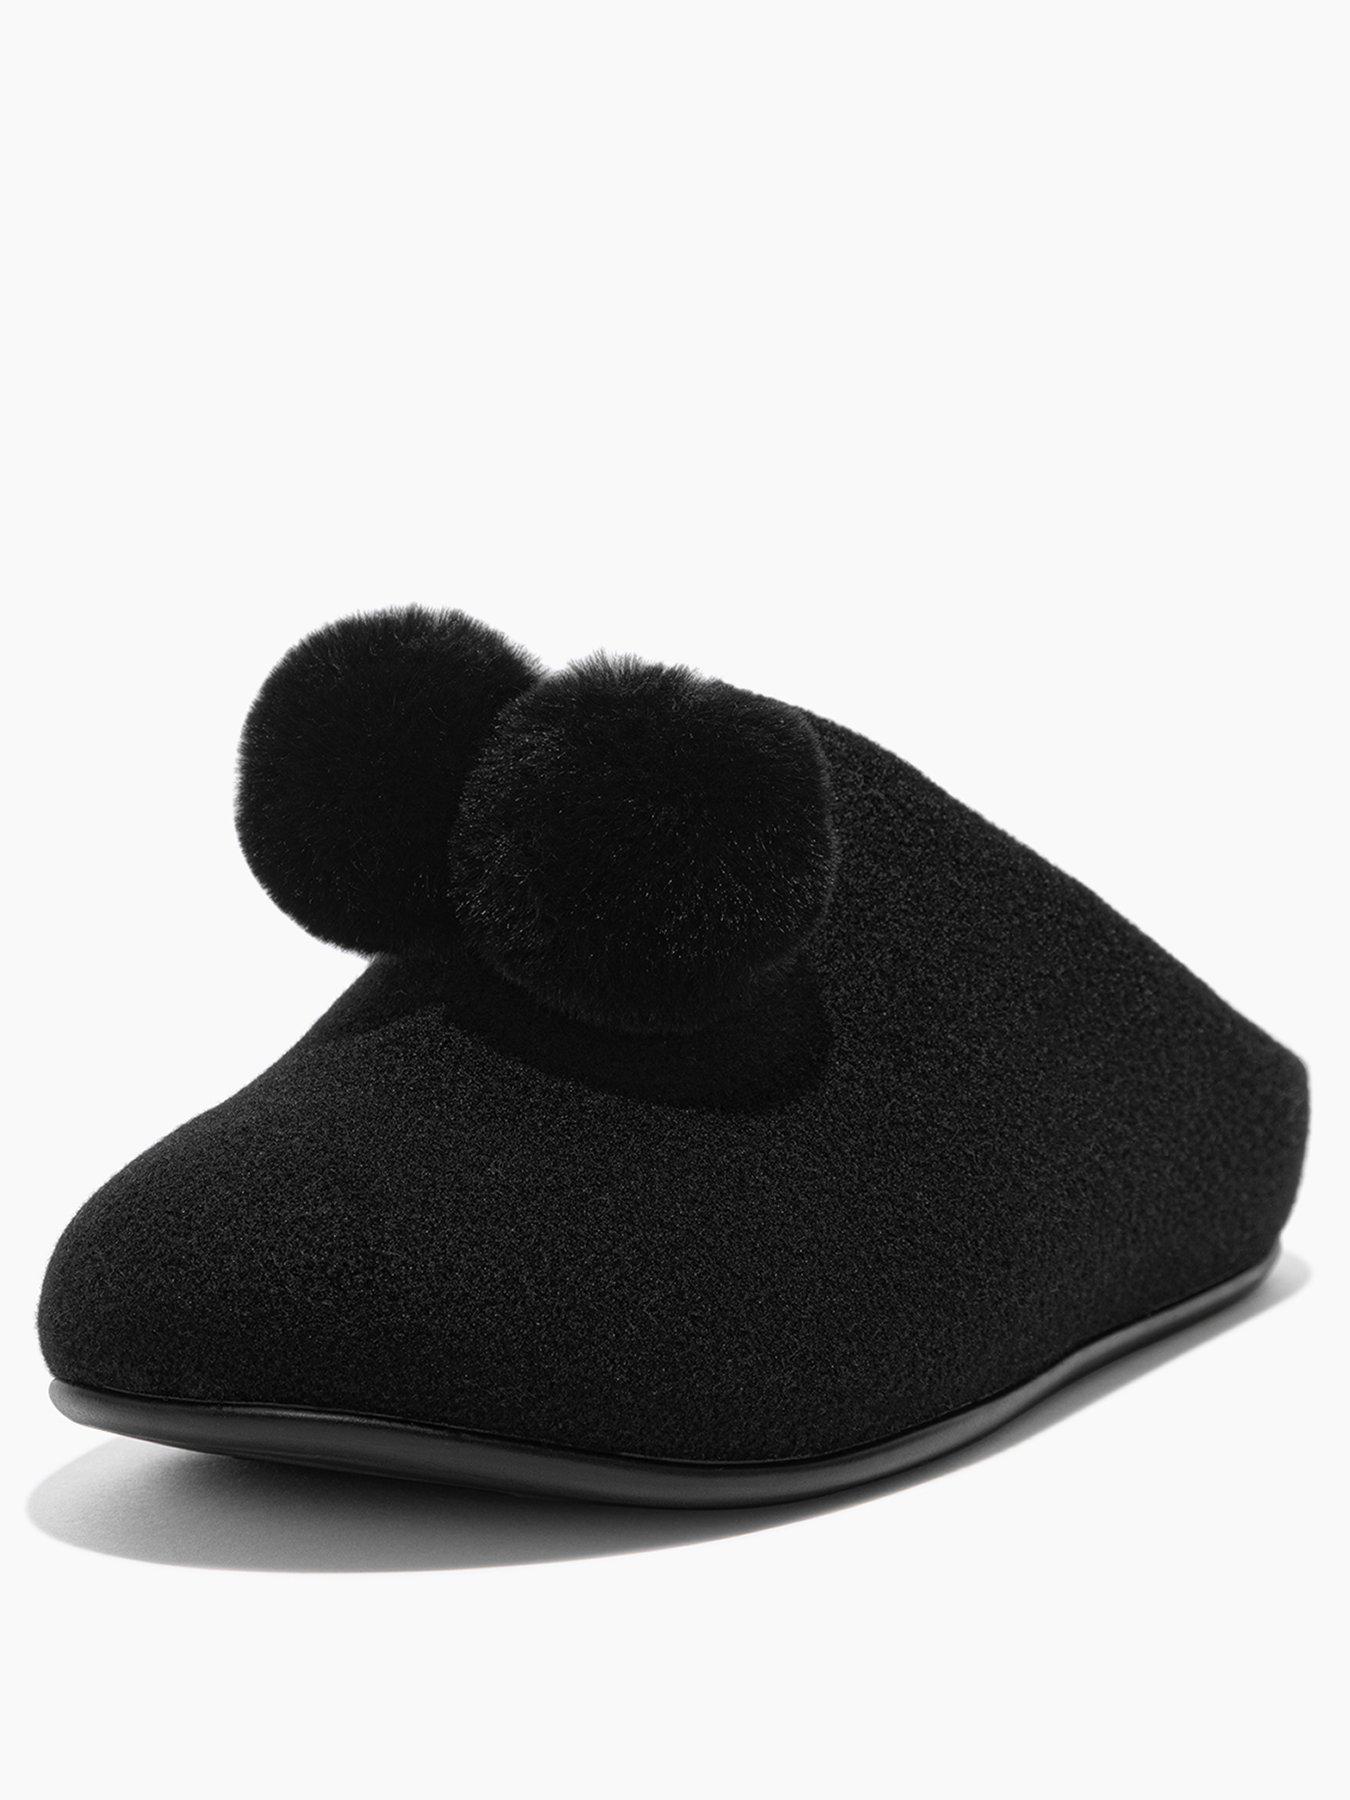 Nightwear & Loungewear Chrissie Pom Pom Slippers - Black